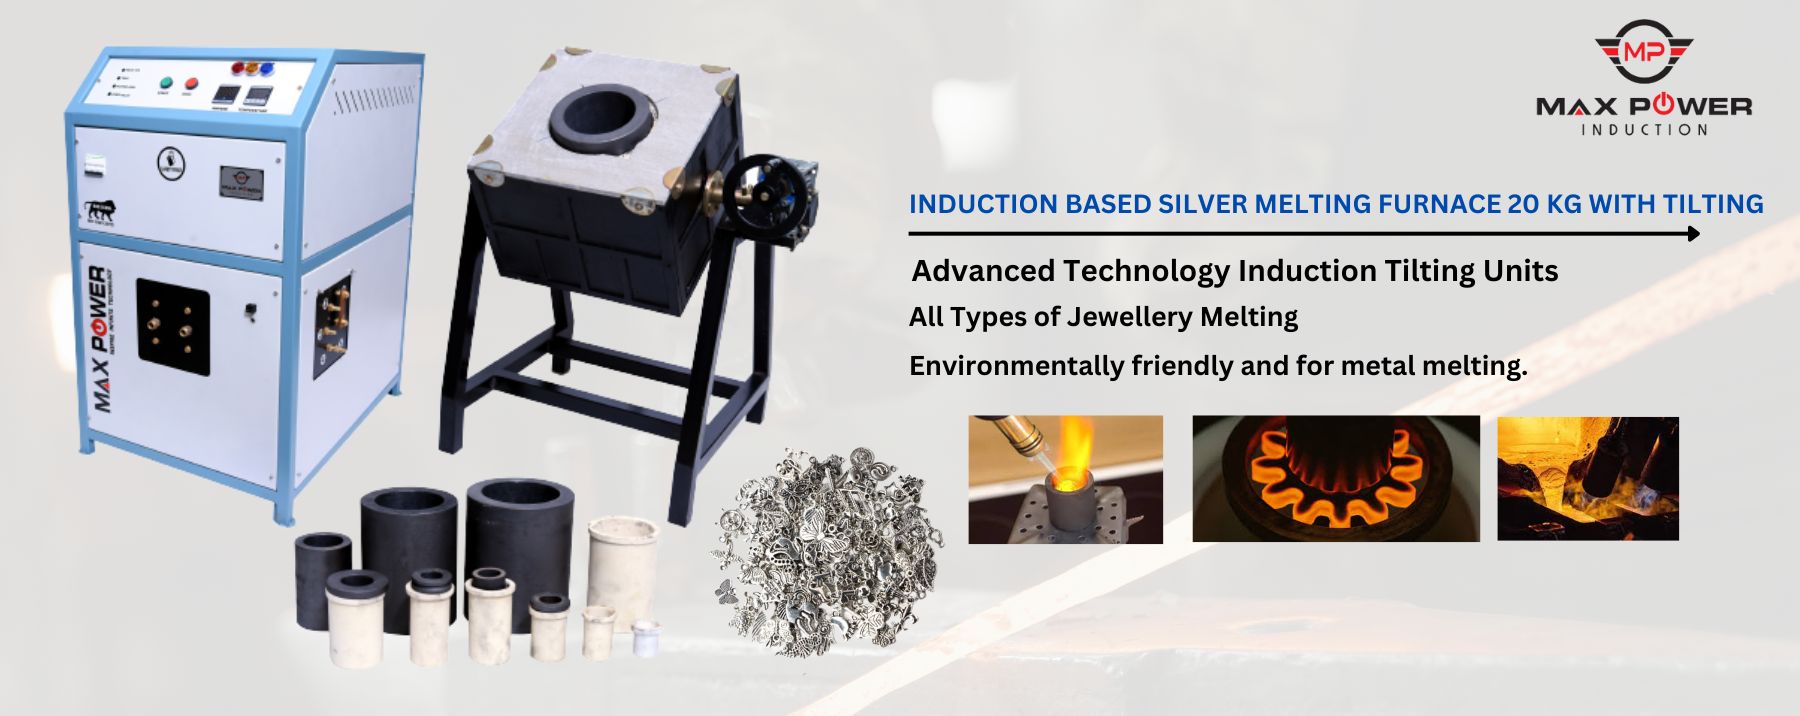 Induction Based Silver Melting Furnace 20 KG With Tilting